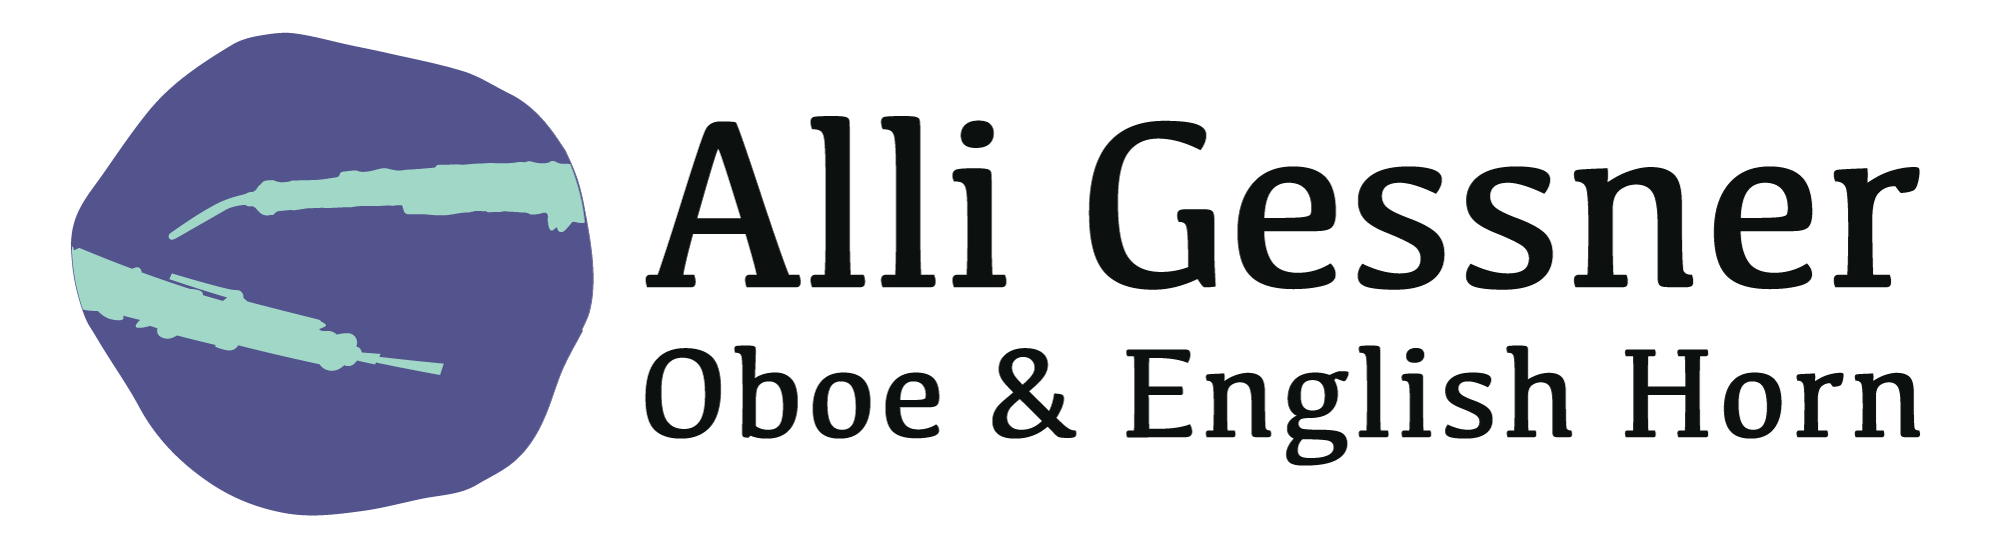 Alli Gessner logo